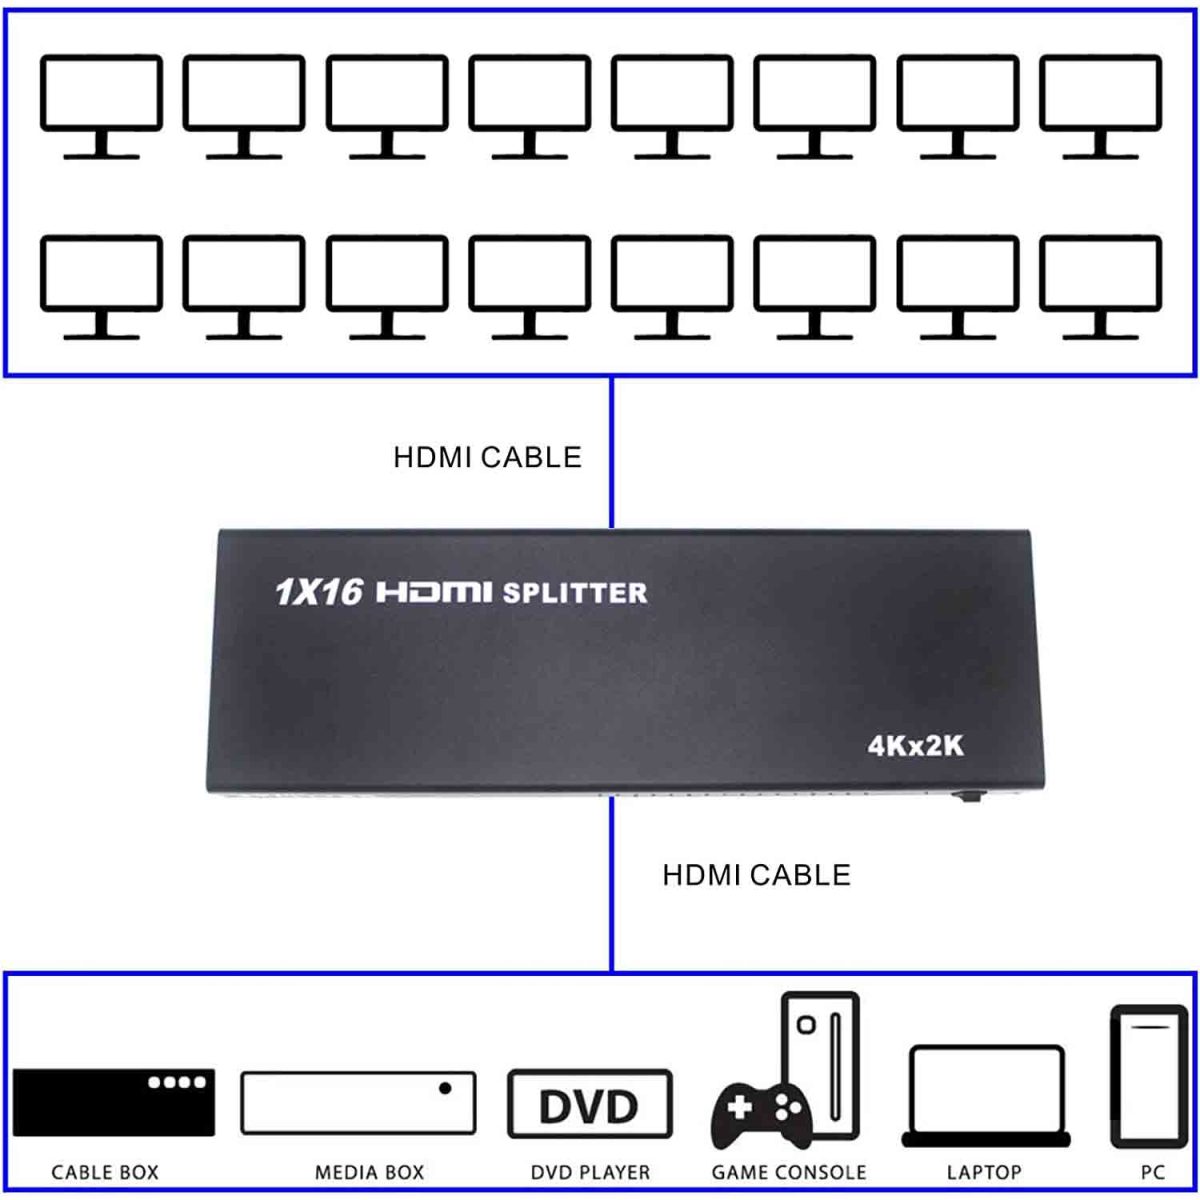 HDMI Splitter (16 Port / 2K x 4K / HDMI 1.4 / Black)